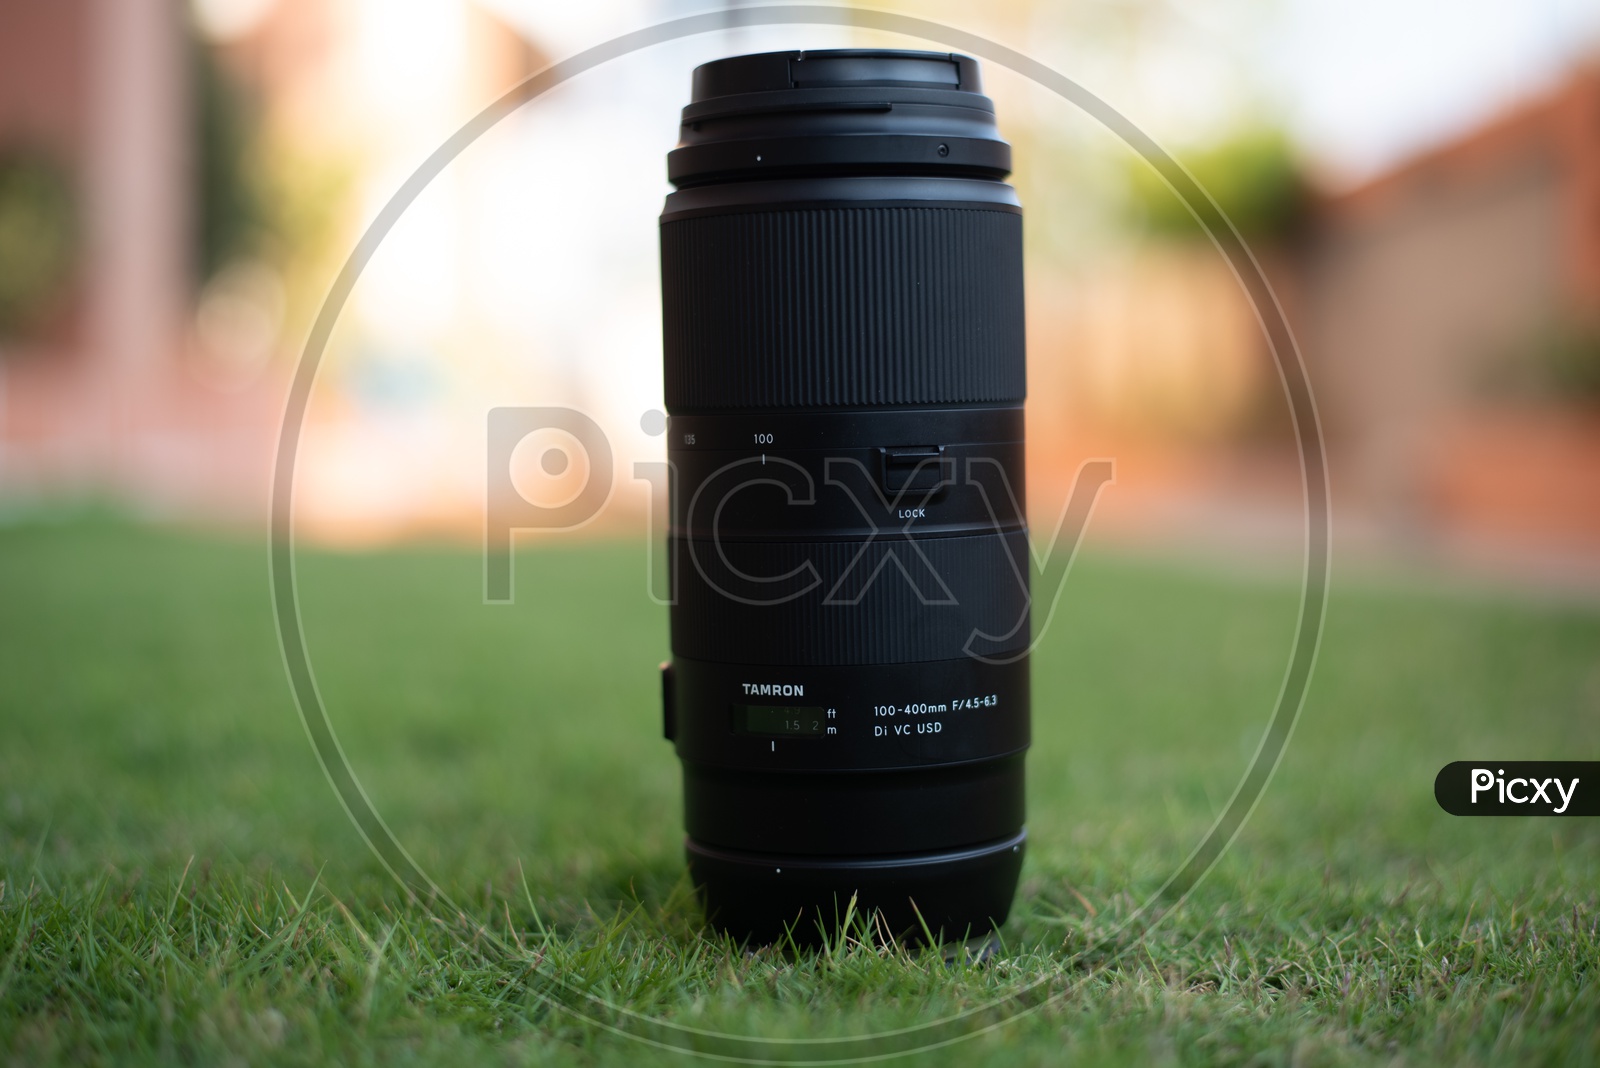 Tamron 100-400 mm Teloephoto DSLR Lens Over Lawn Garden Green Grass Background